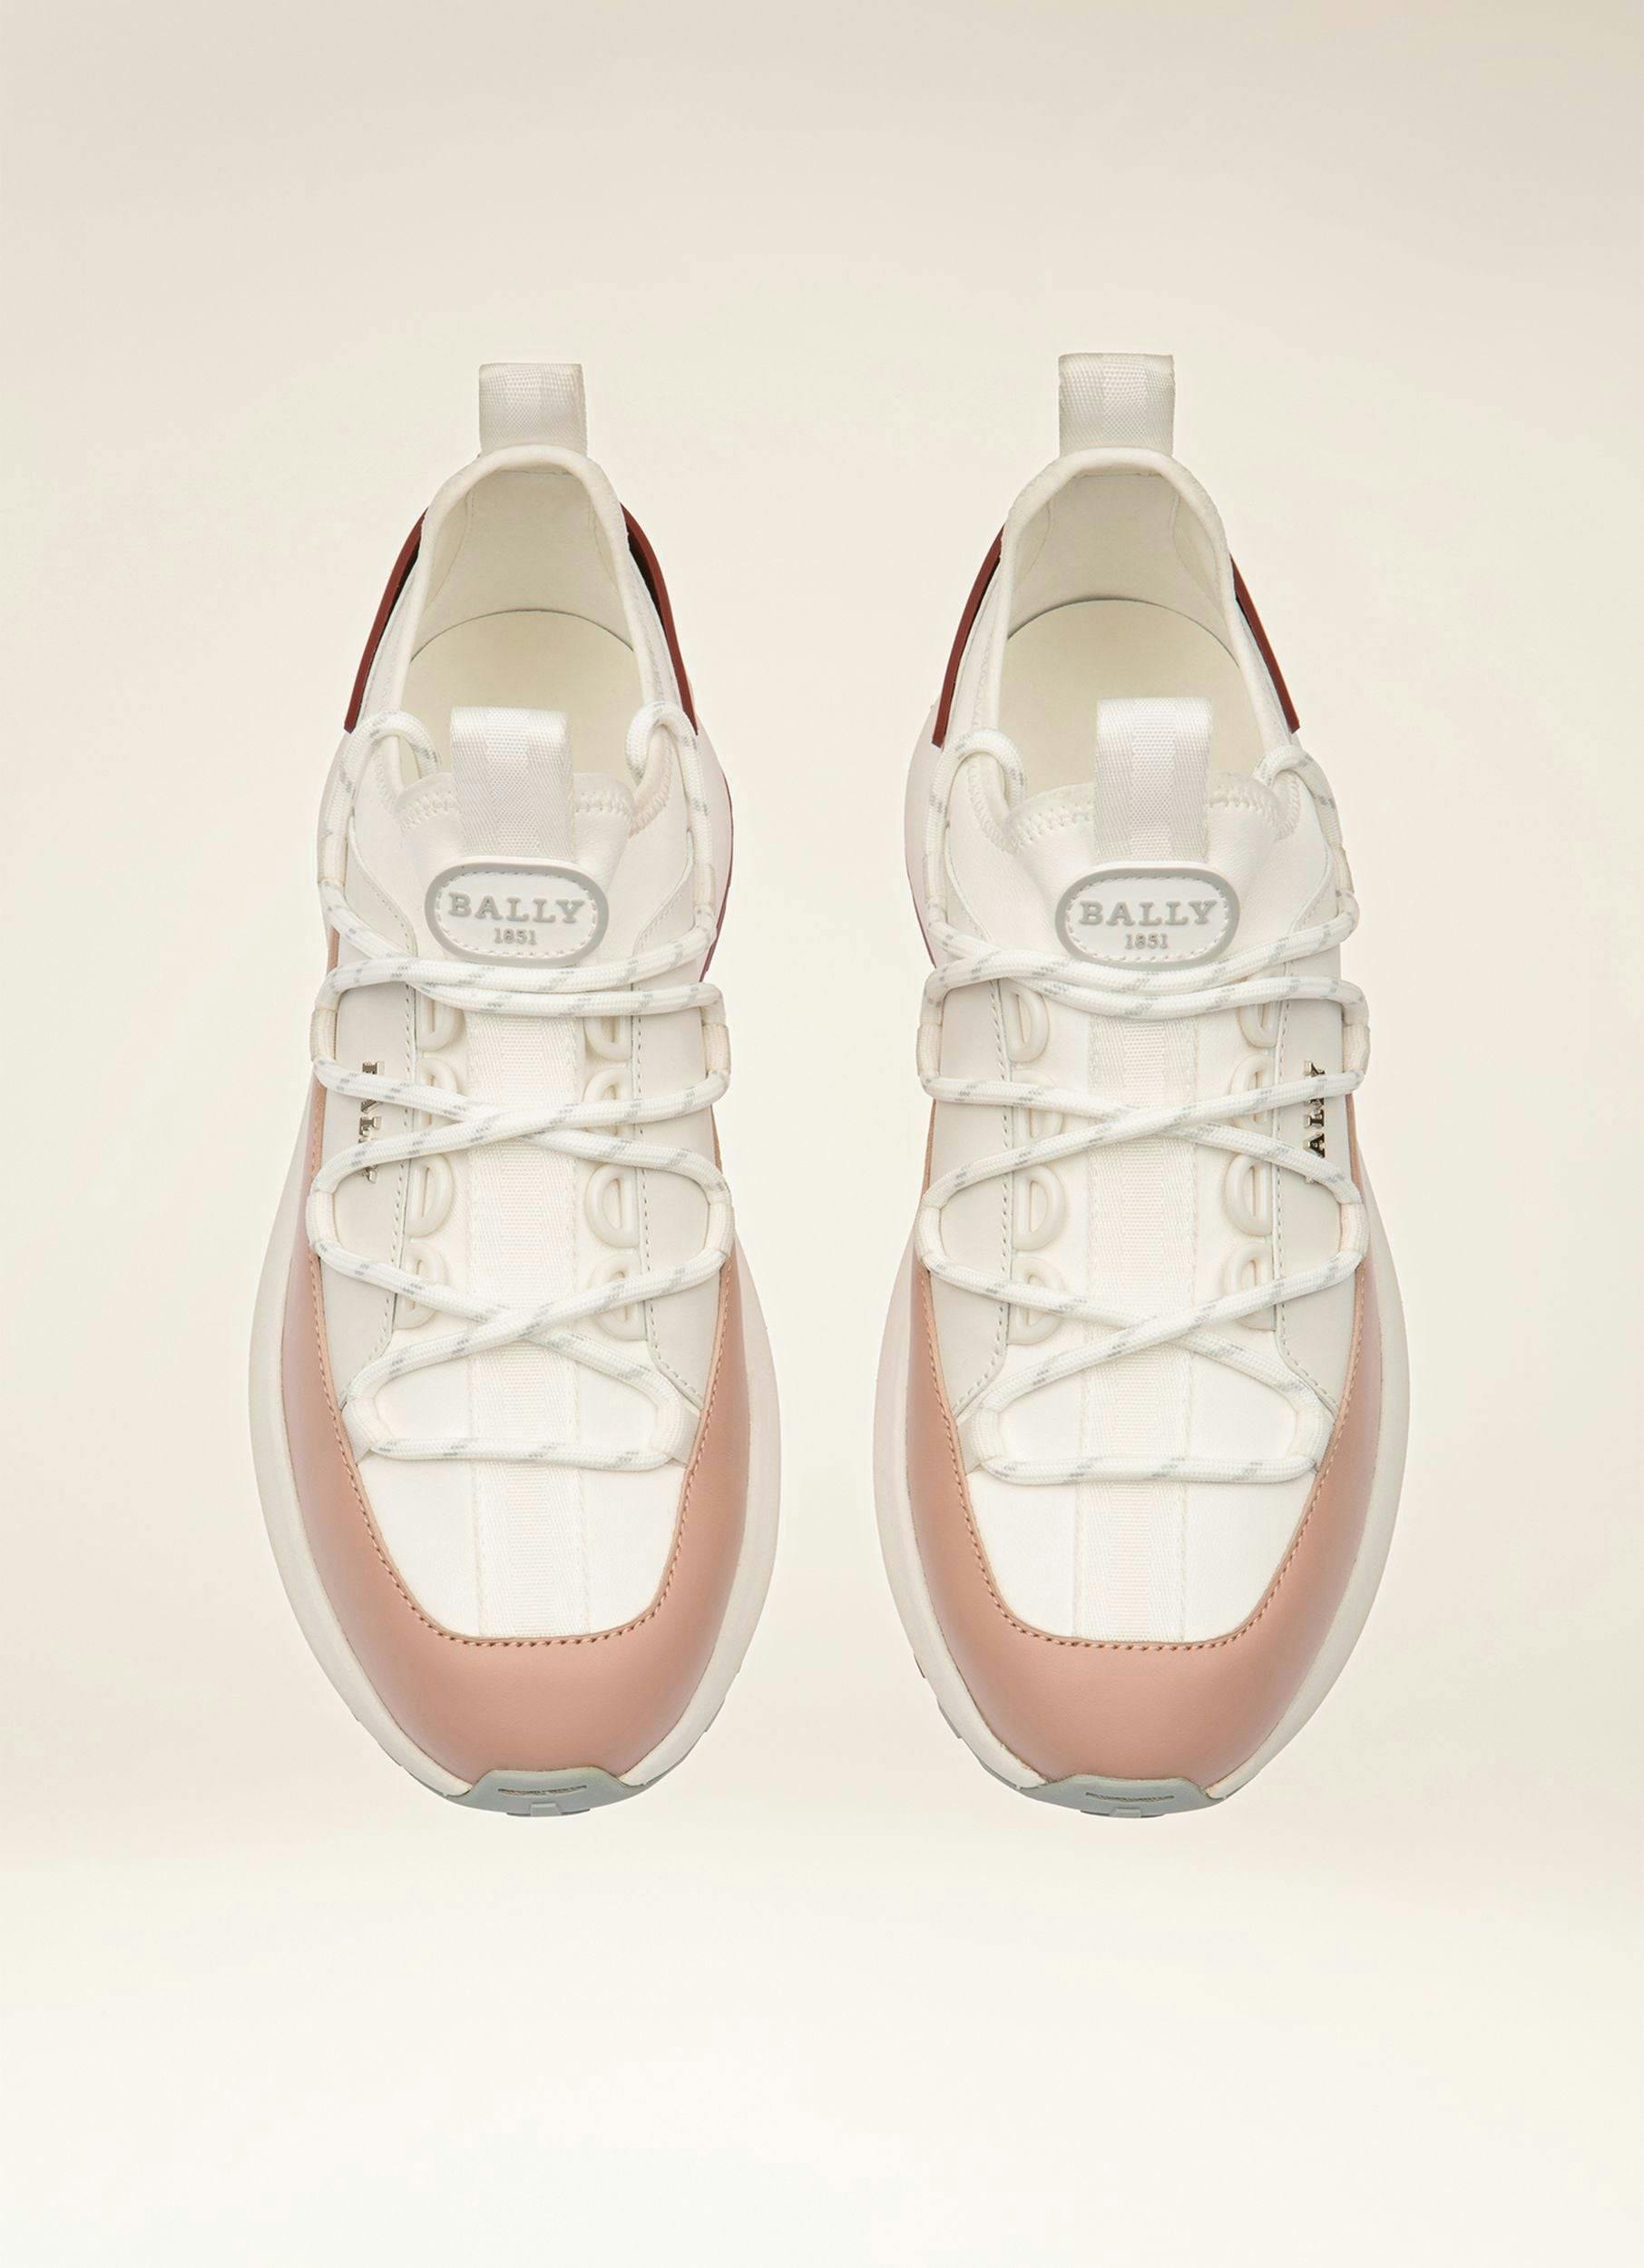 Delys Sneaker In Pelle Bianca E Rosa - Donna - Bally - 04